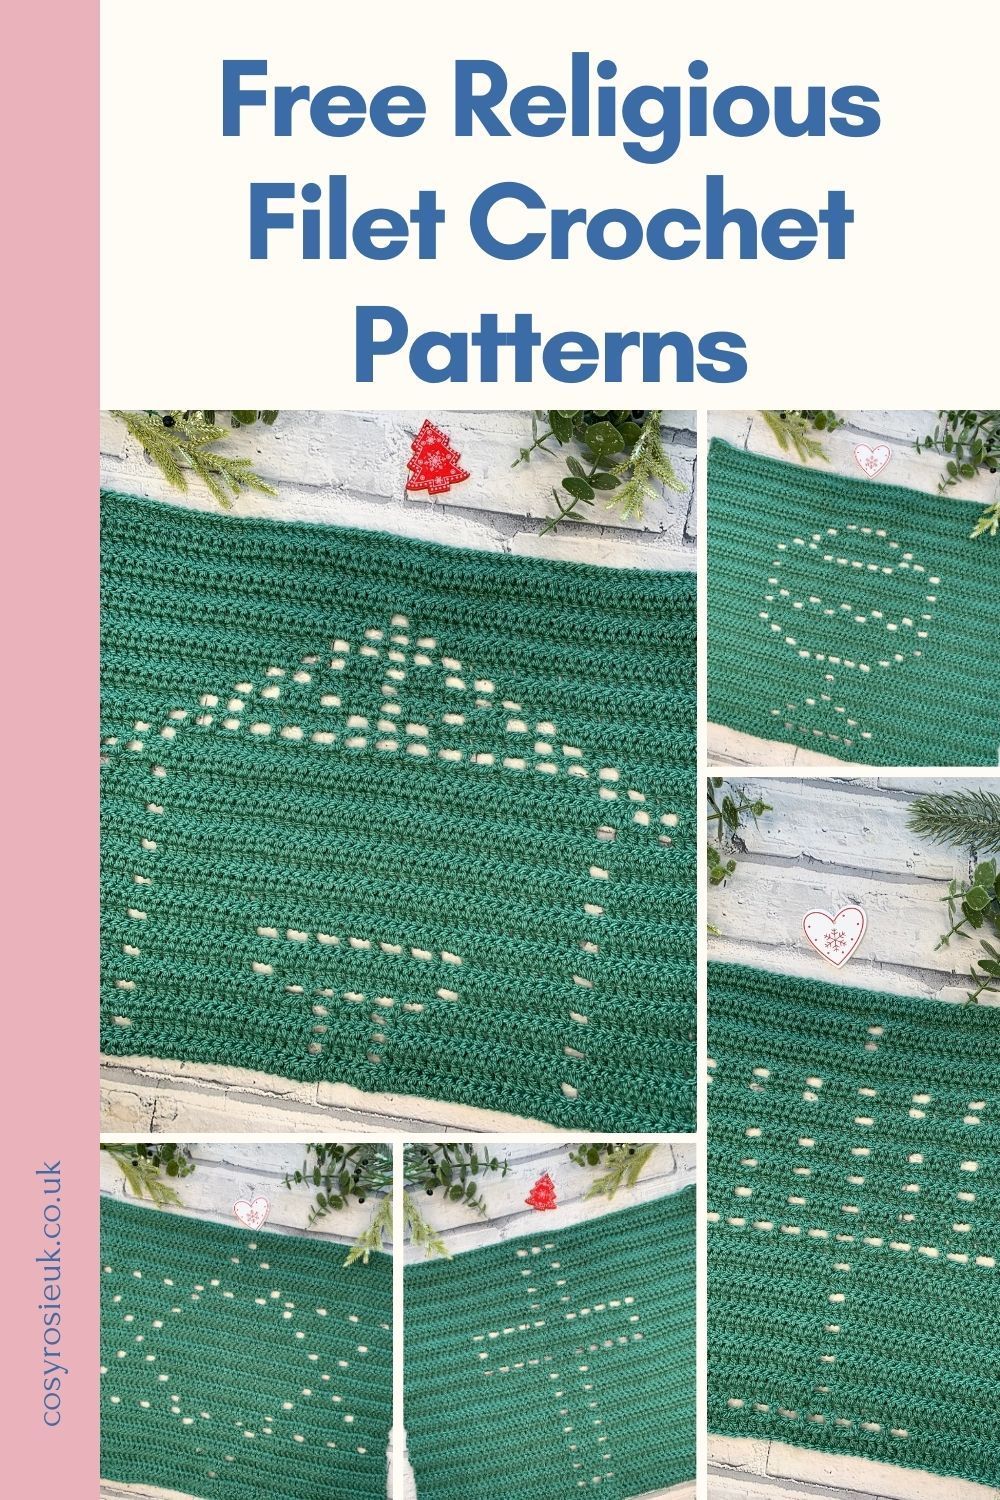 Free Religious Filet Crochet Patterns Pin